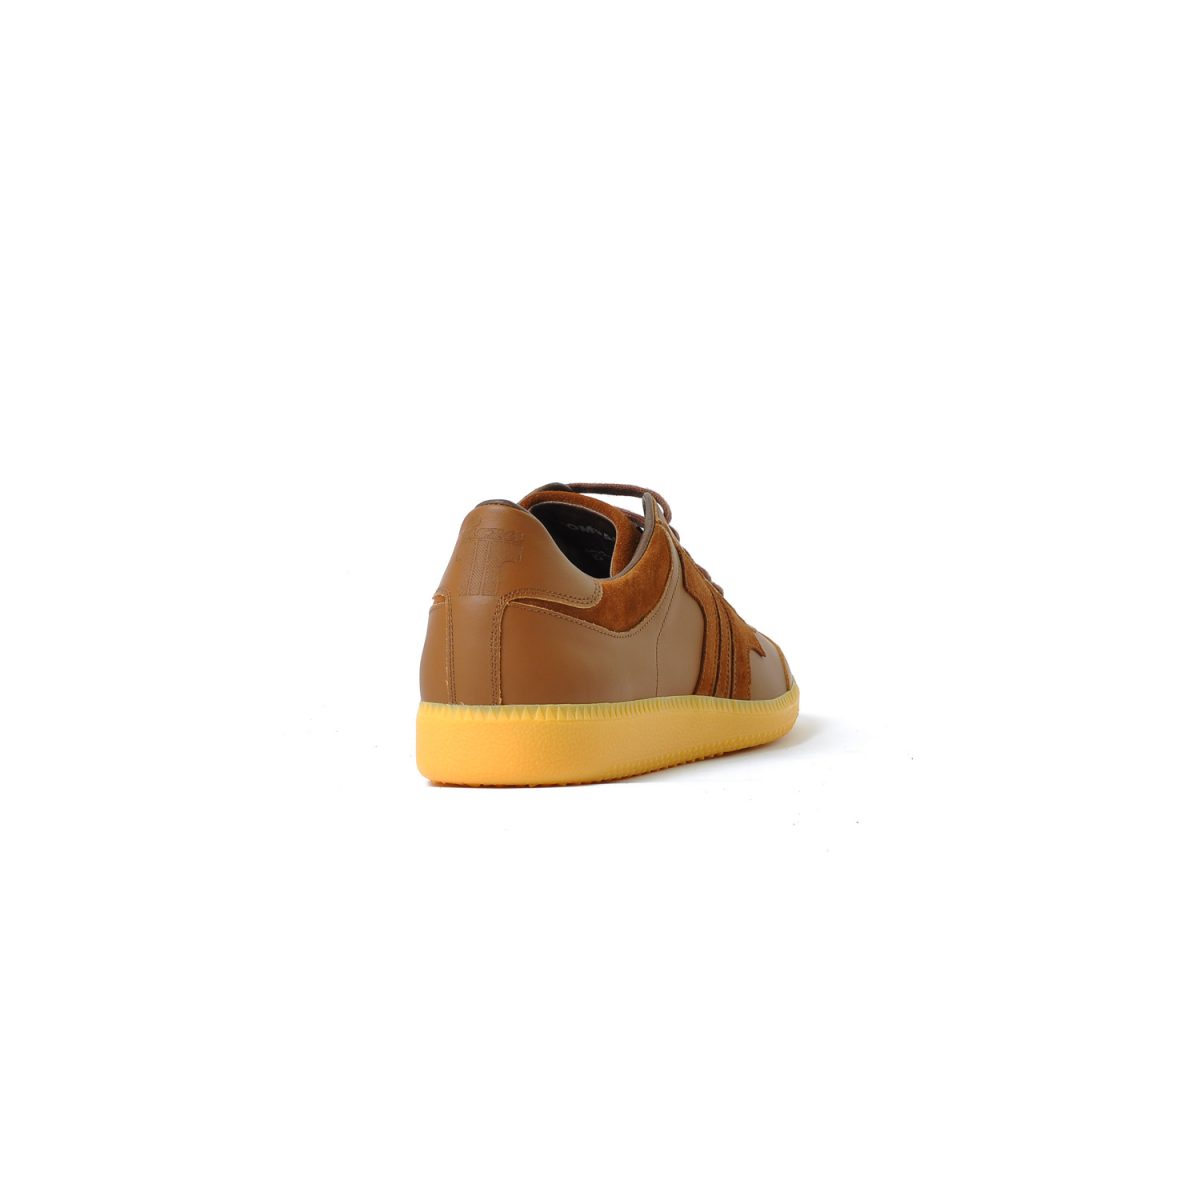 Tisza shoes - Compakt - Bronze-rust